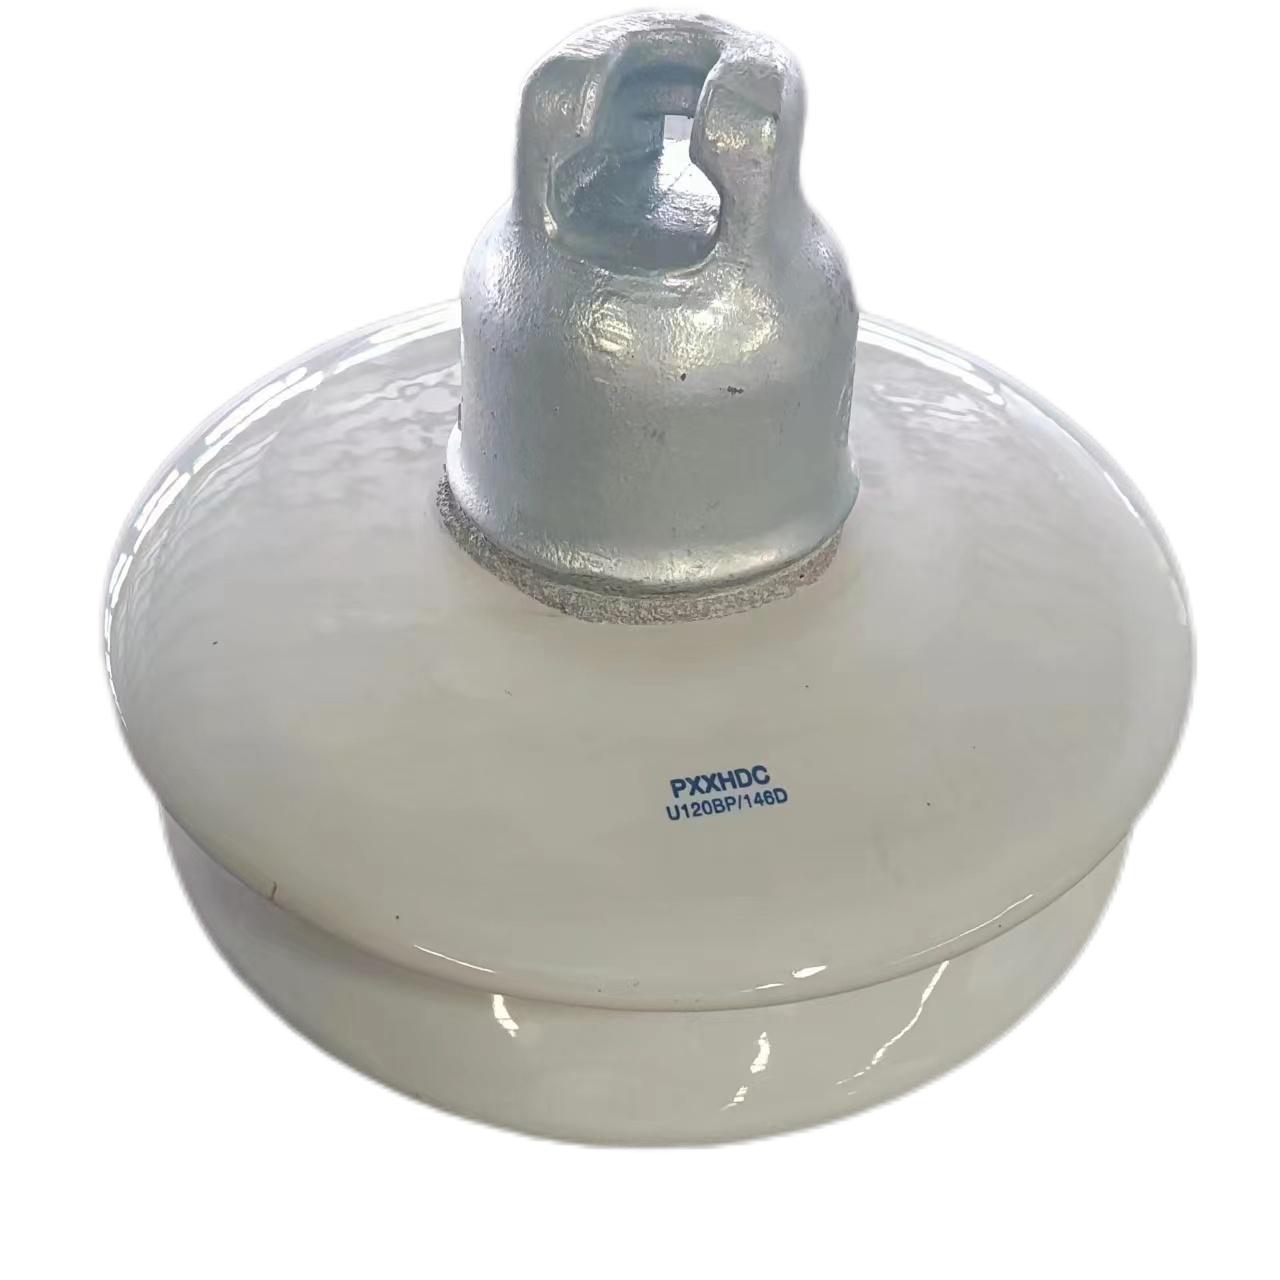 Product name: U120BP/146 anti-pollution disc suspension porcelain insulator Featured Image